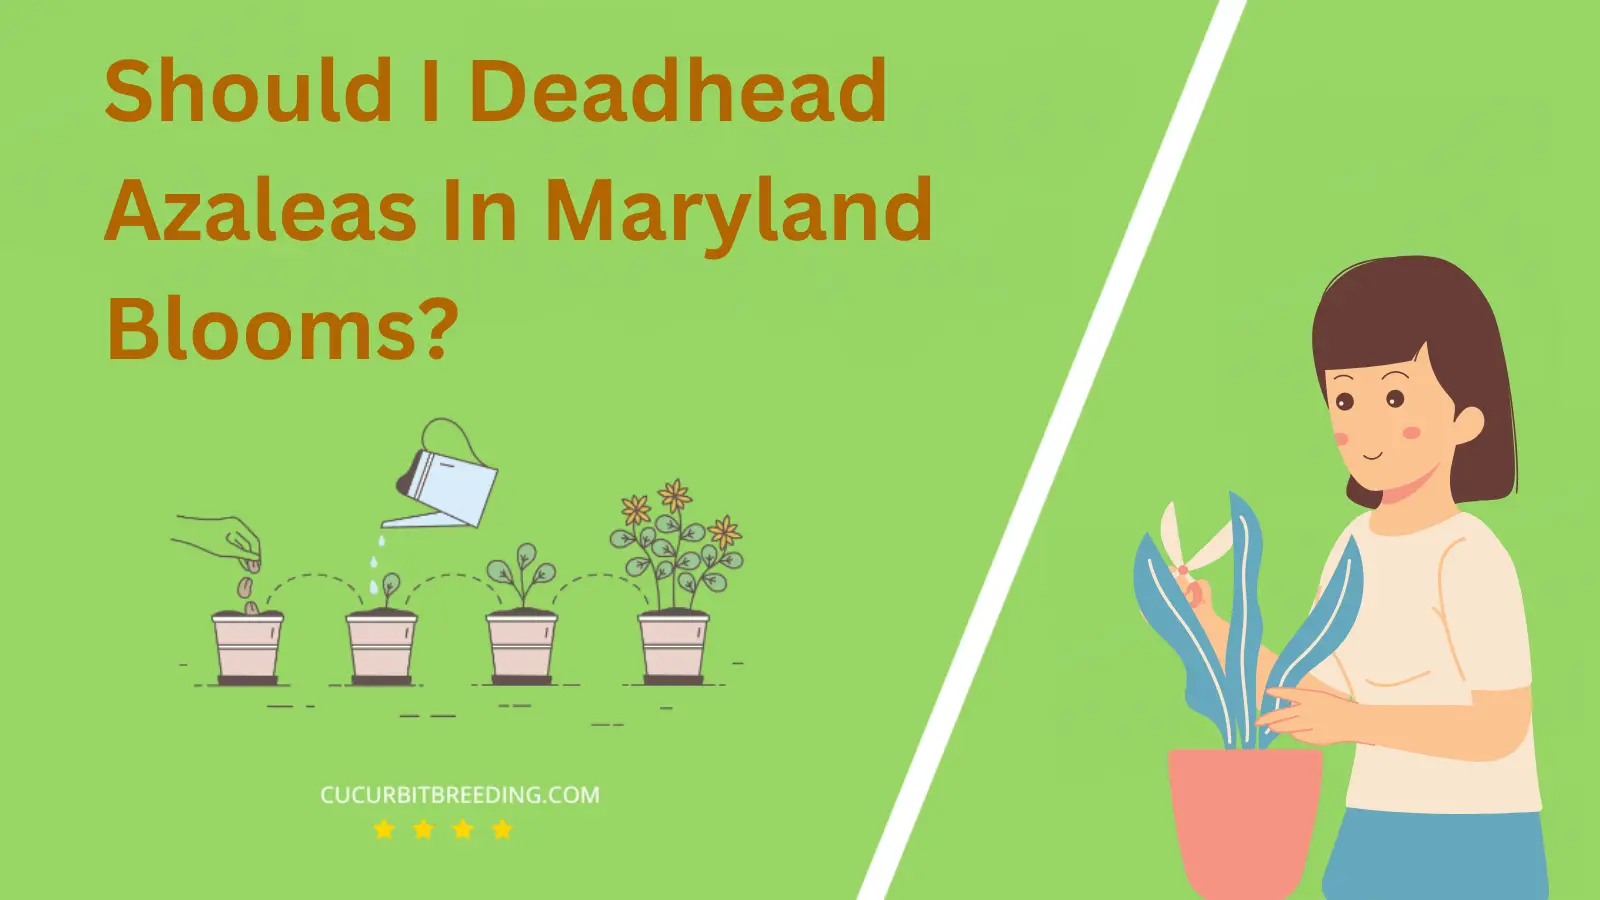 Should I Deadhead Azaleas In Maryland Blooms?